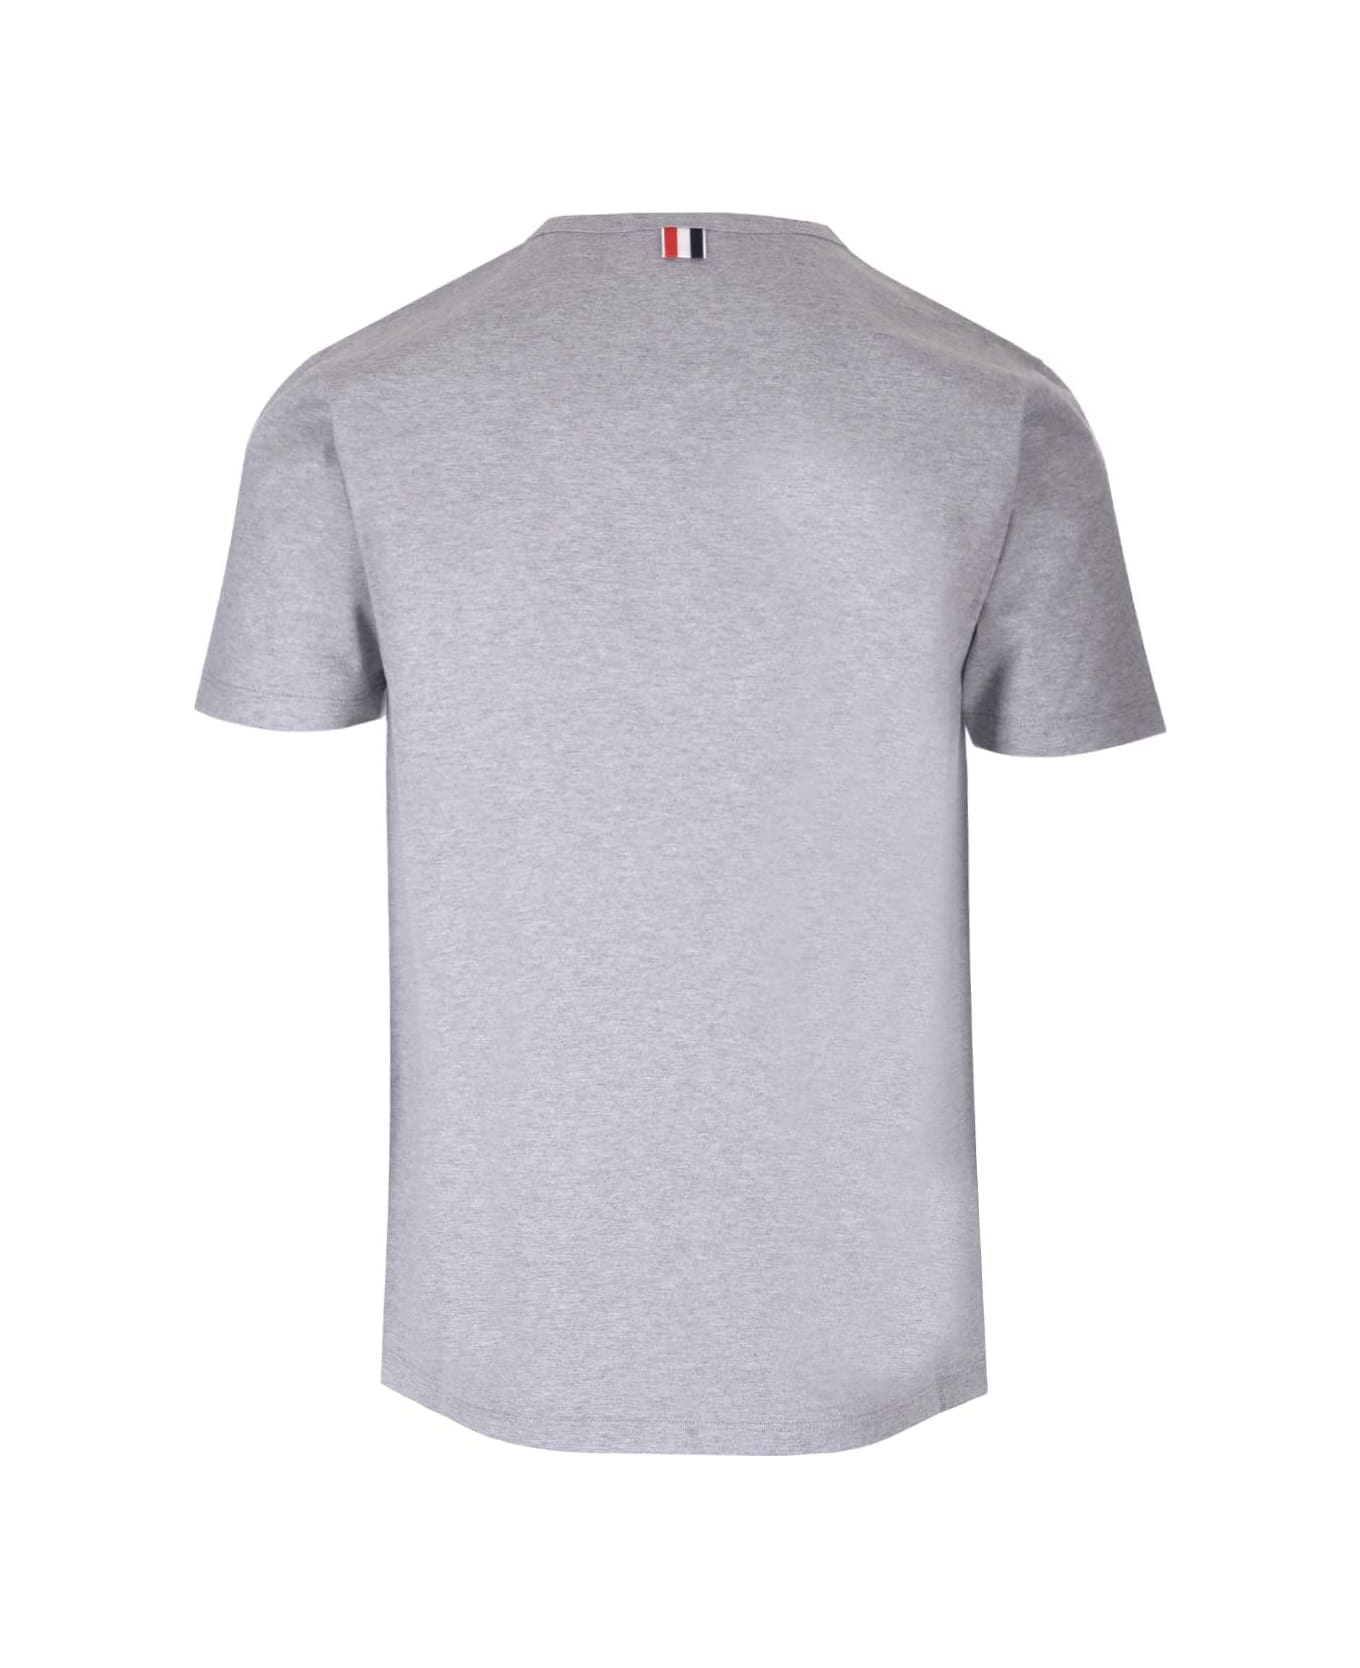 Thom Browne Patch Pocket T-shirt - Grey